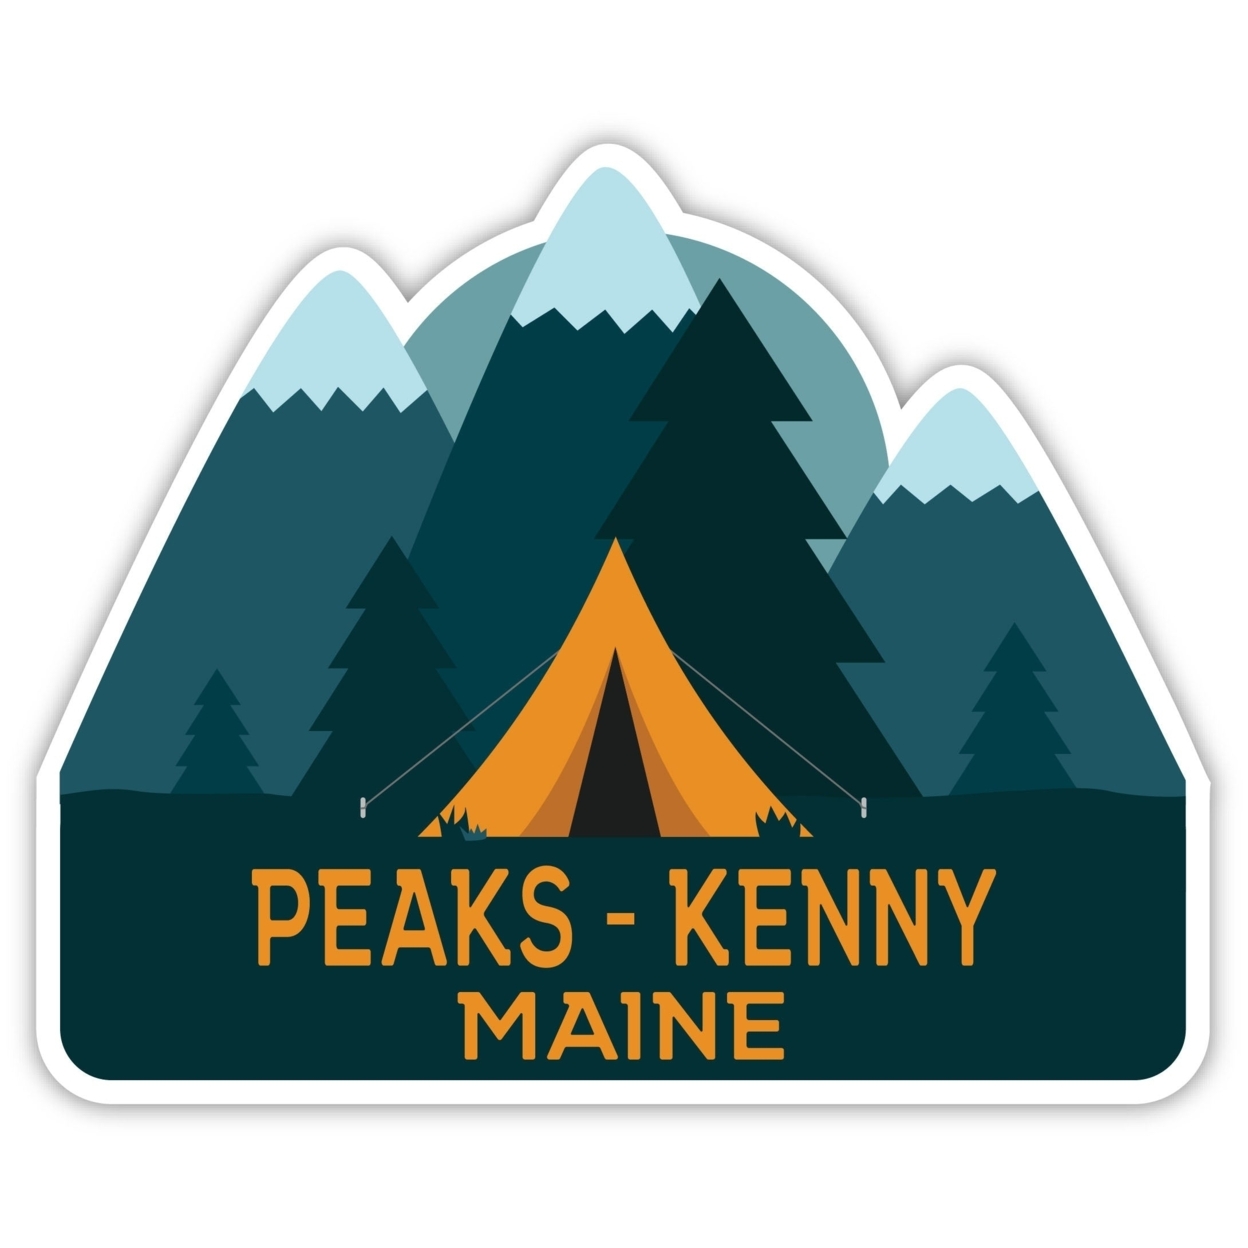 Peaks - Kenny Maine Souvenir Decorative Stickers (Choose Theme And Size) - Single Unit, 4-Inch, Tent